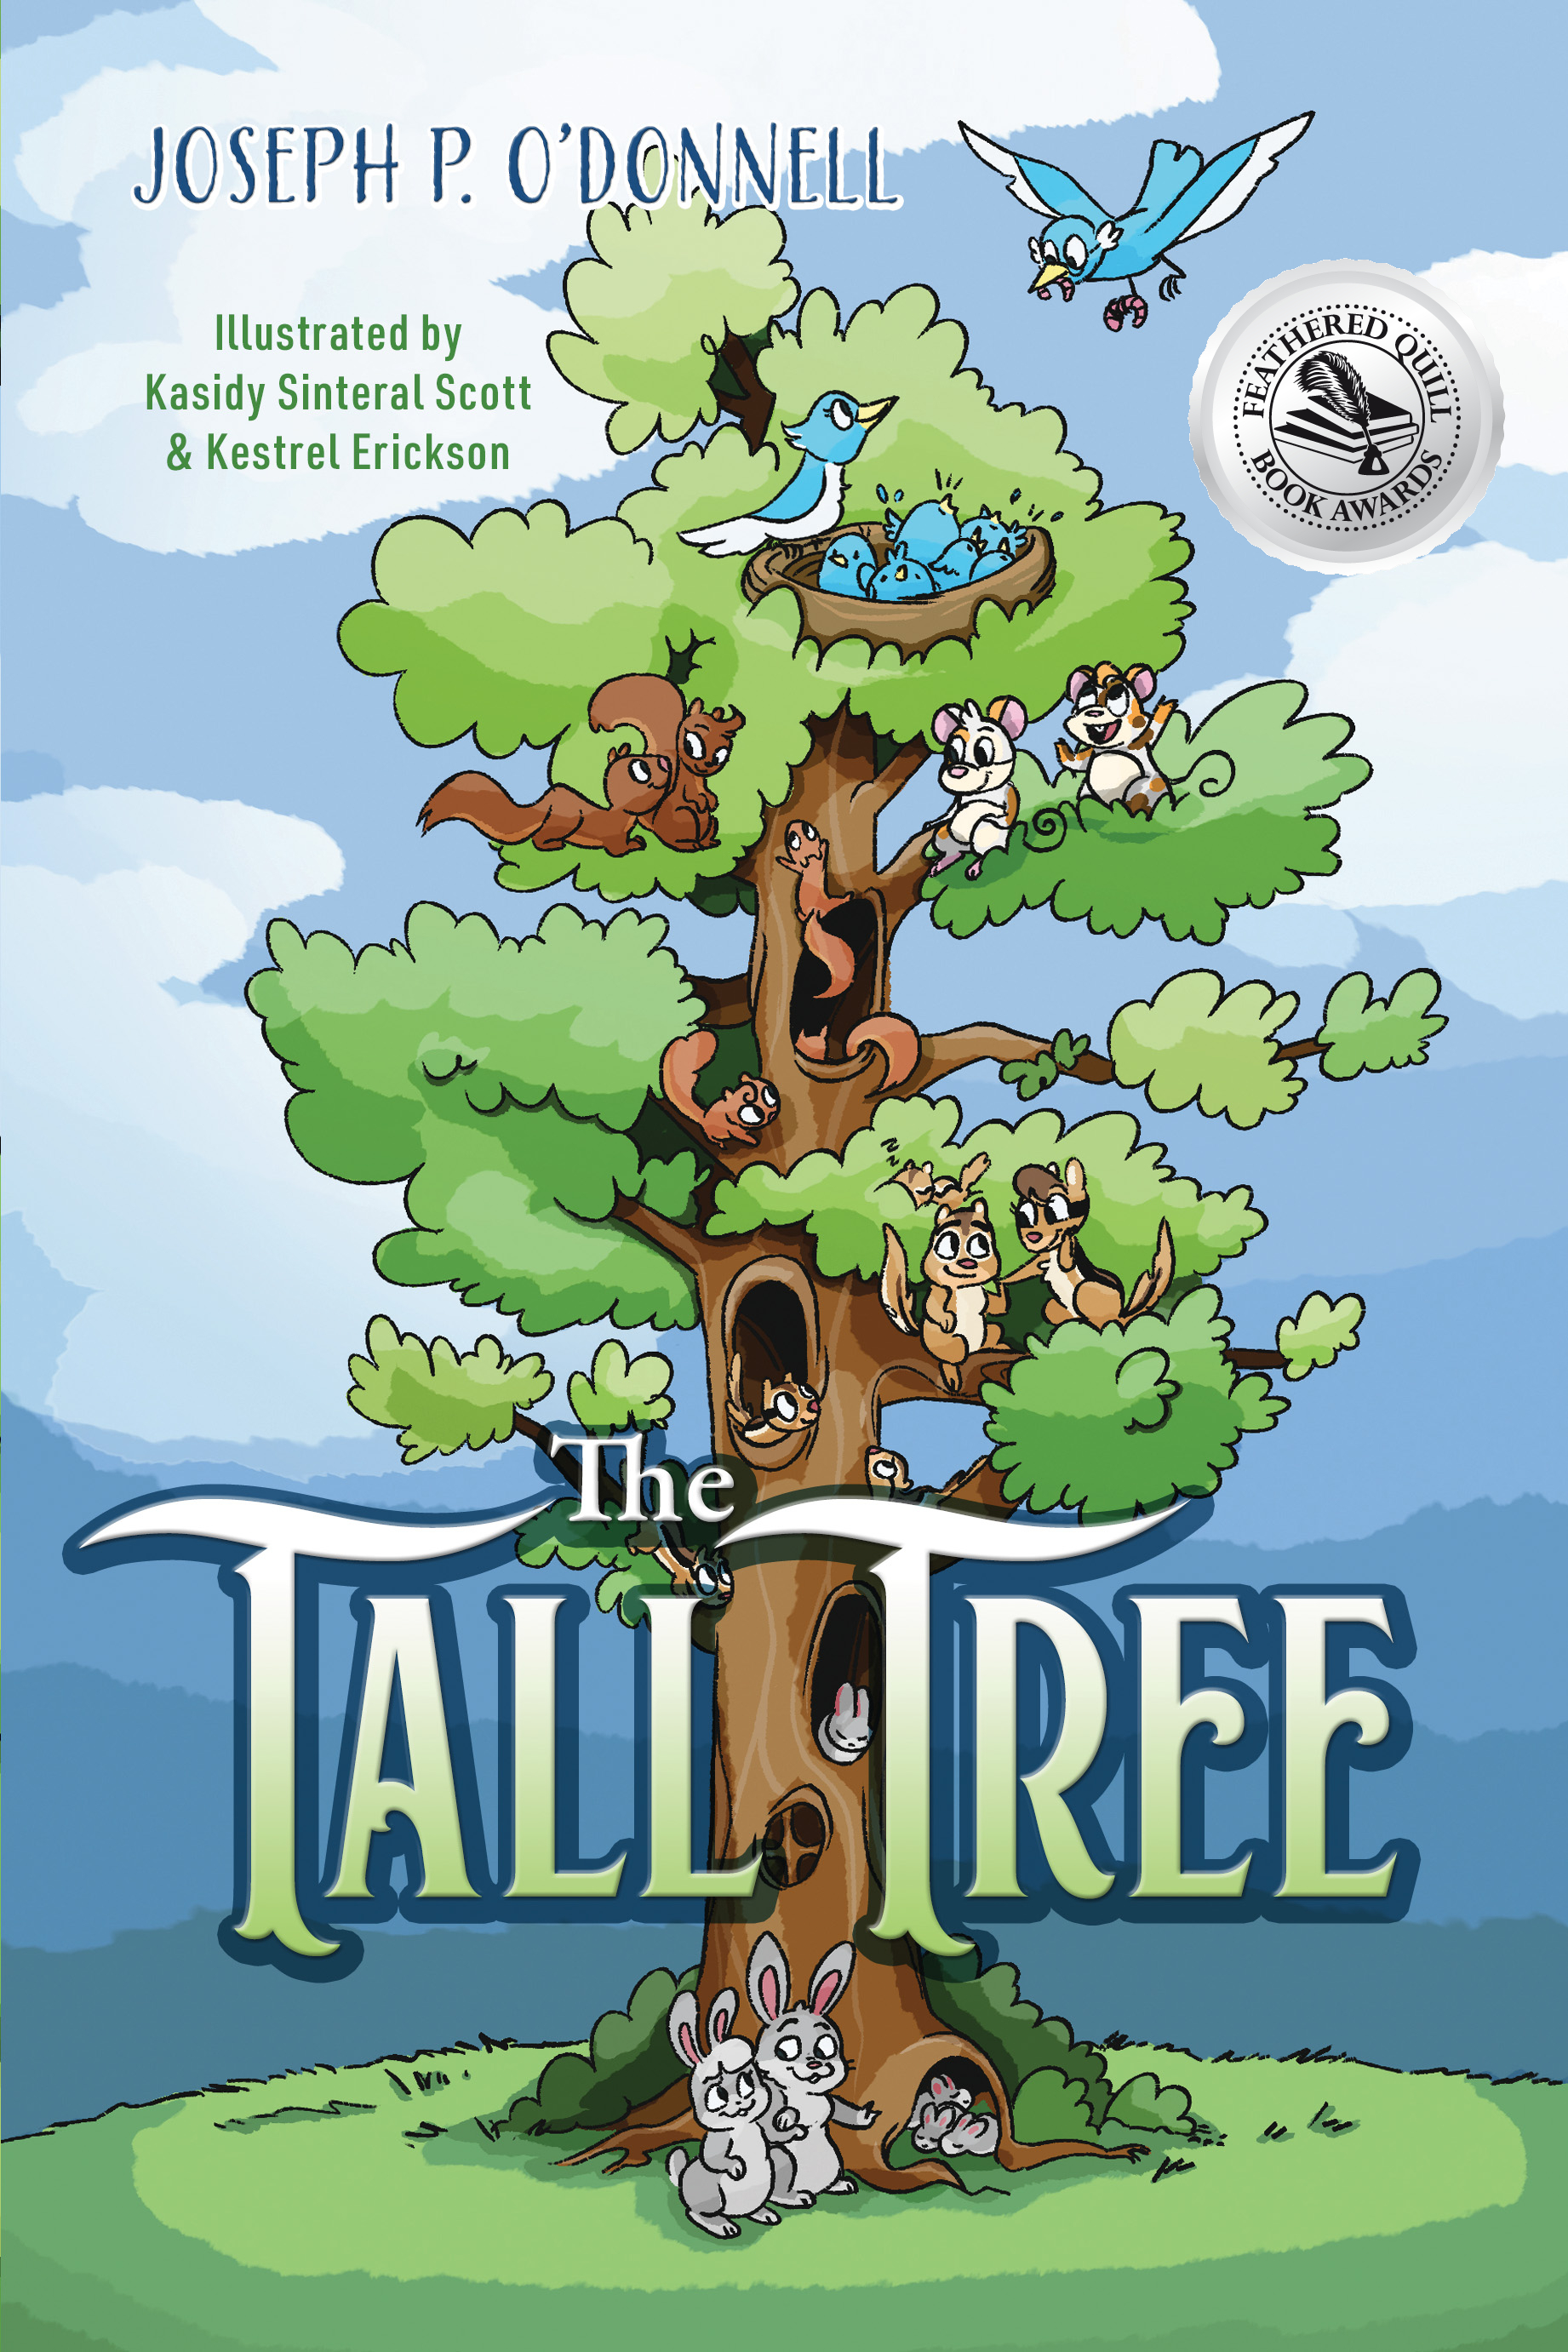 The Tall Tree